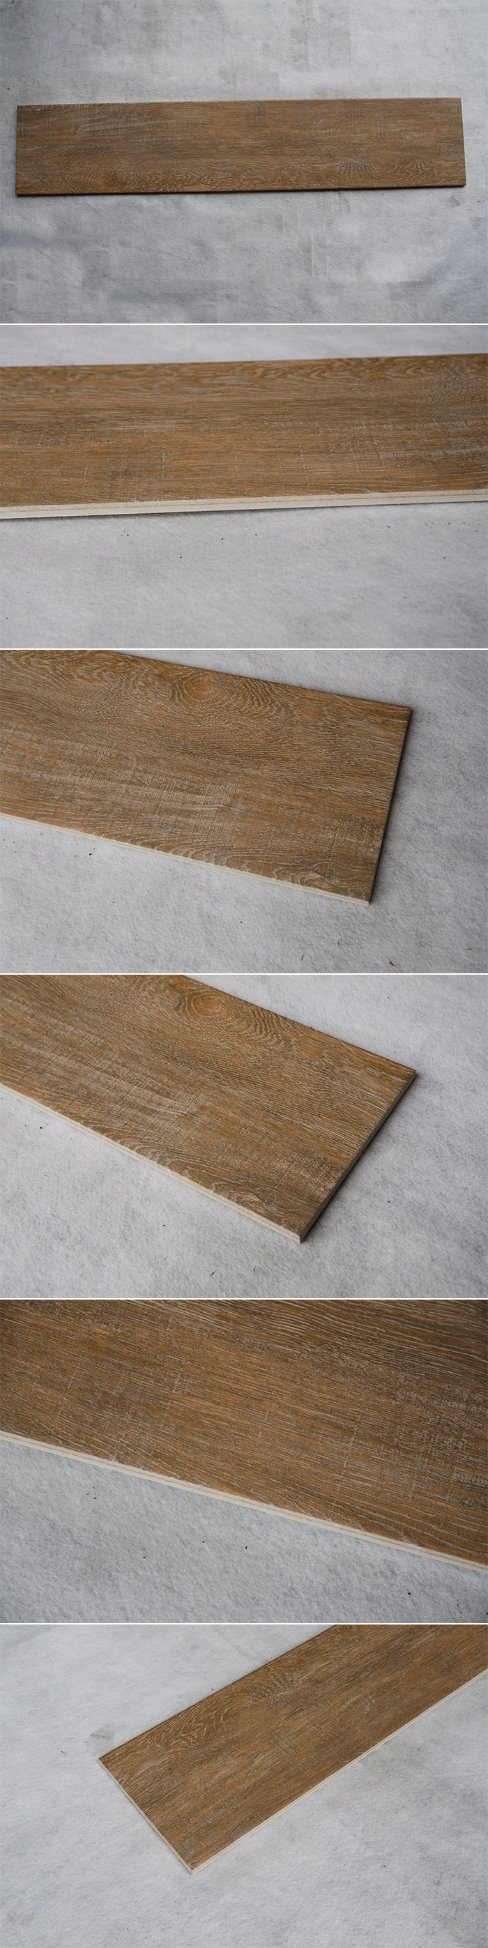 Non Slip Wood Tile a Ceramic Price Grain Wooden Tiles